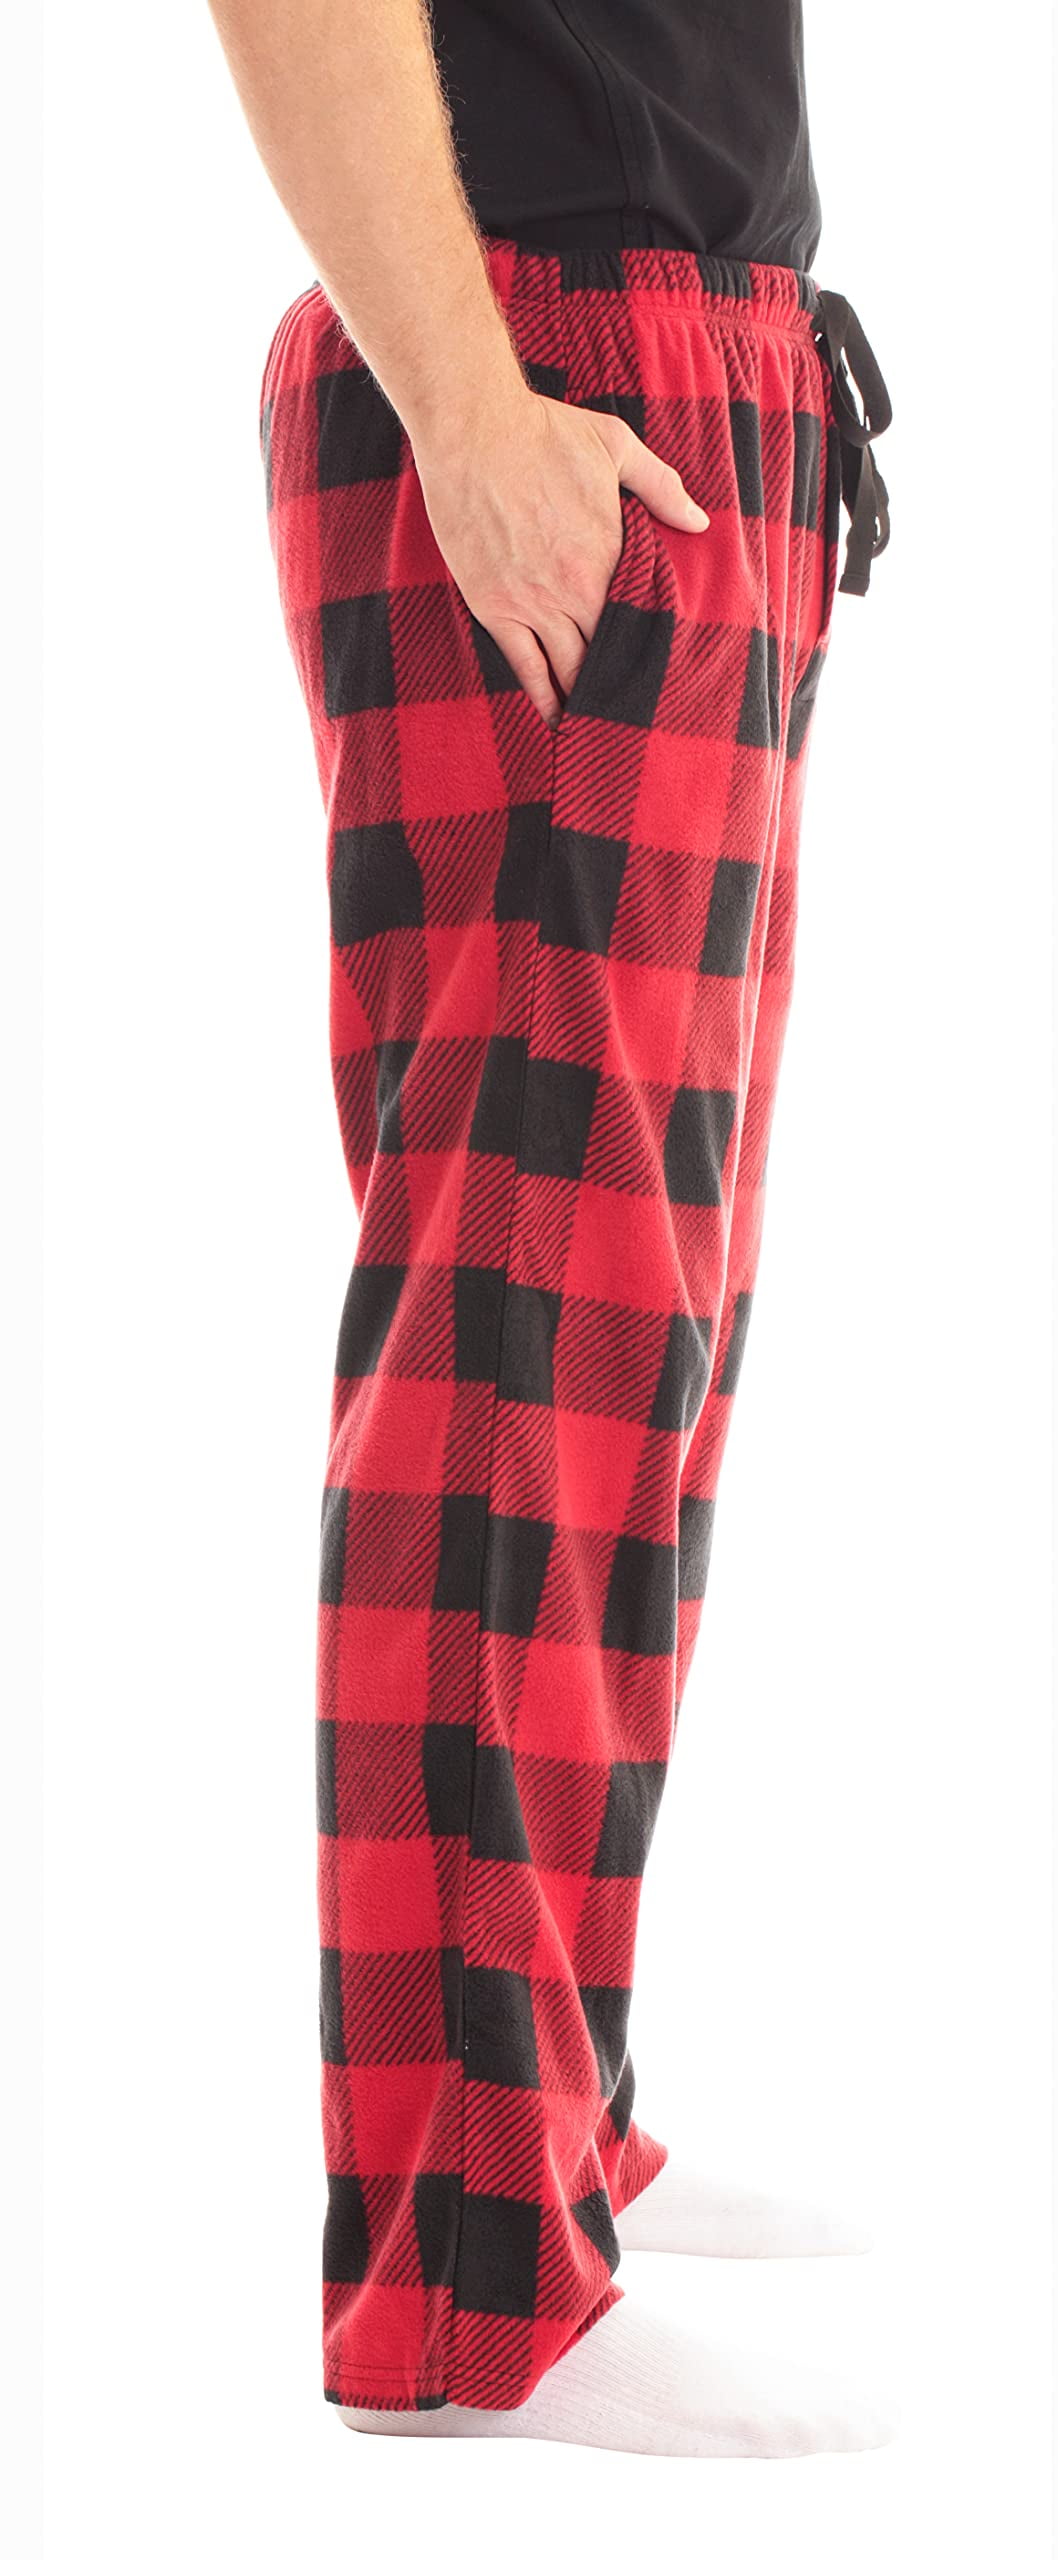 45910-1A-XL #FollowMe Polar Fleece Pajama Pants Set for Men / Sleepwear /  PJs (Small, Black Top / Red Buffalo Plaid Pant) - Just Love Fashion